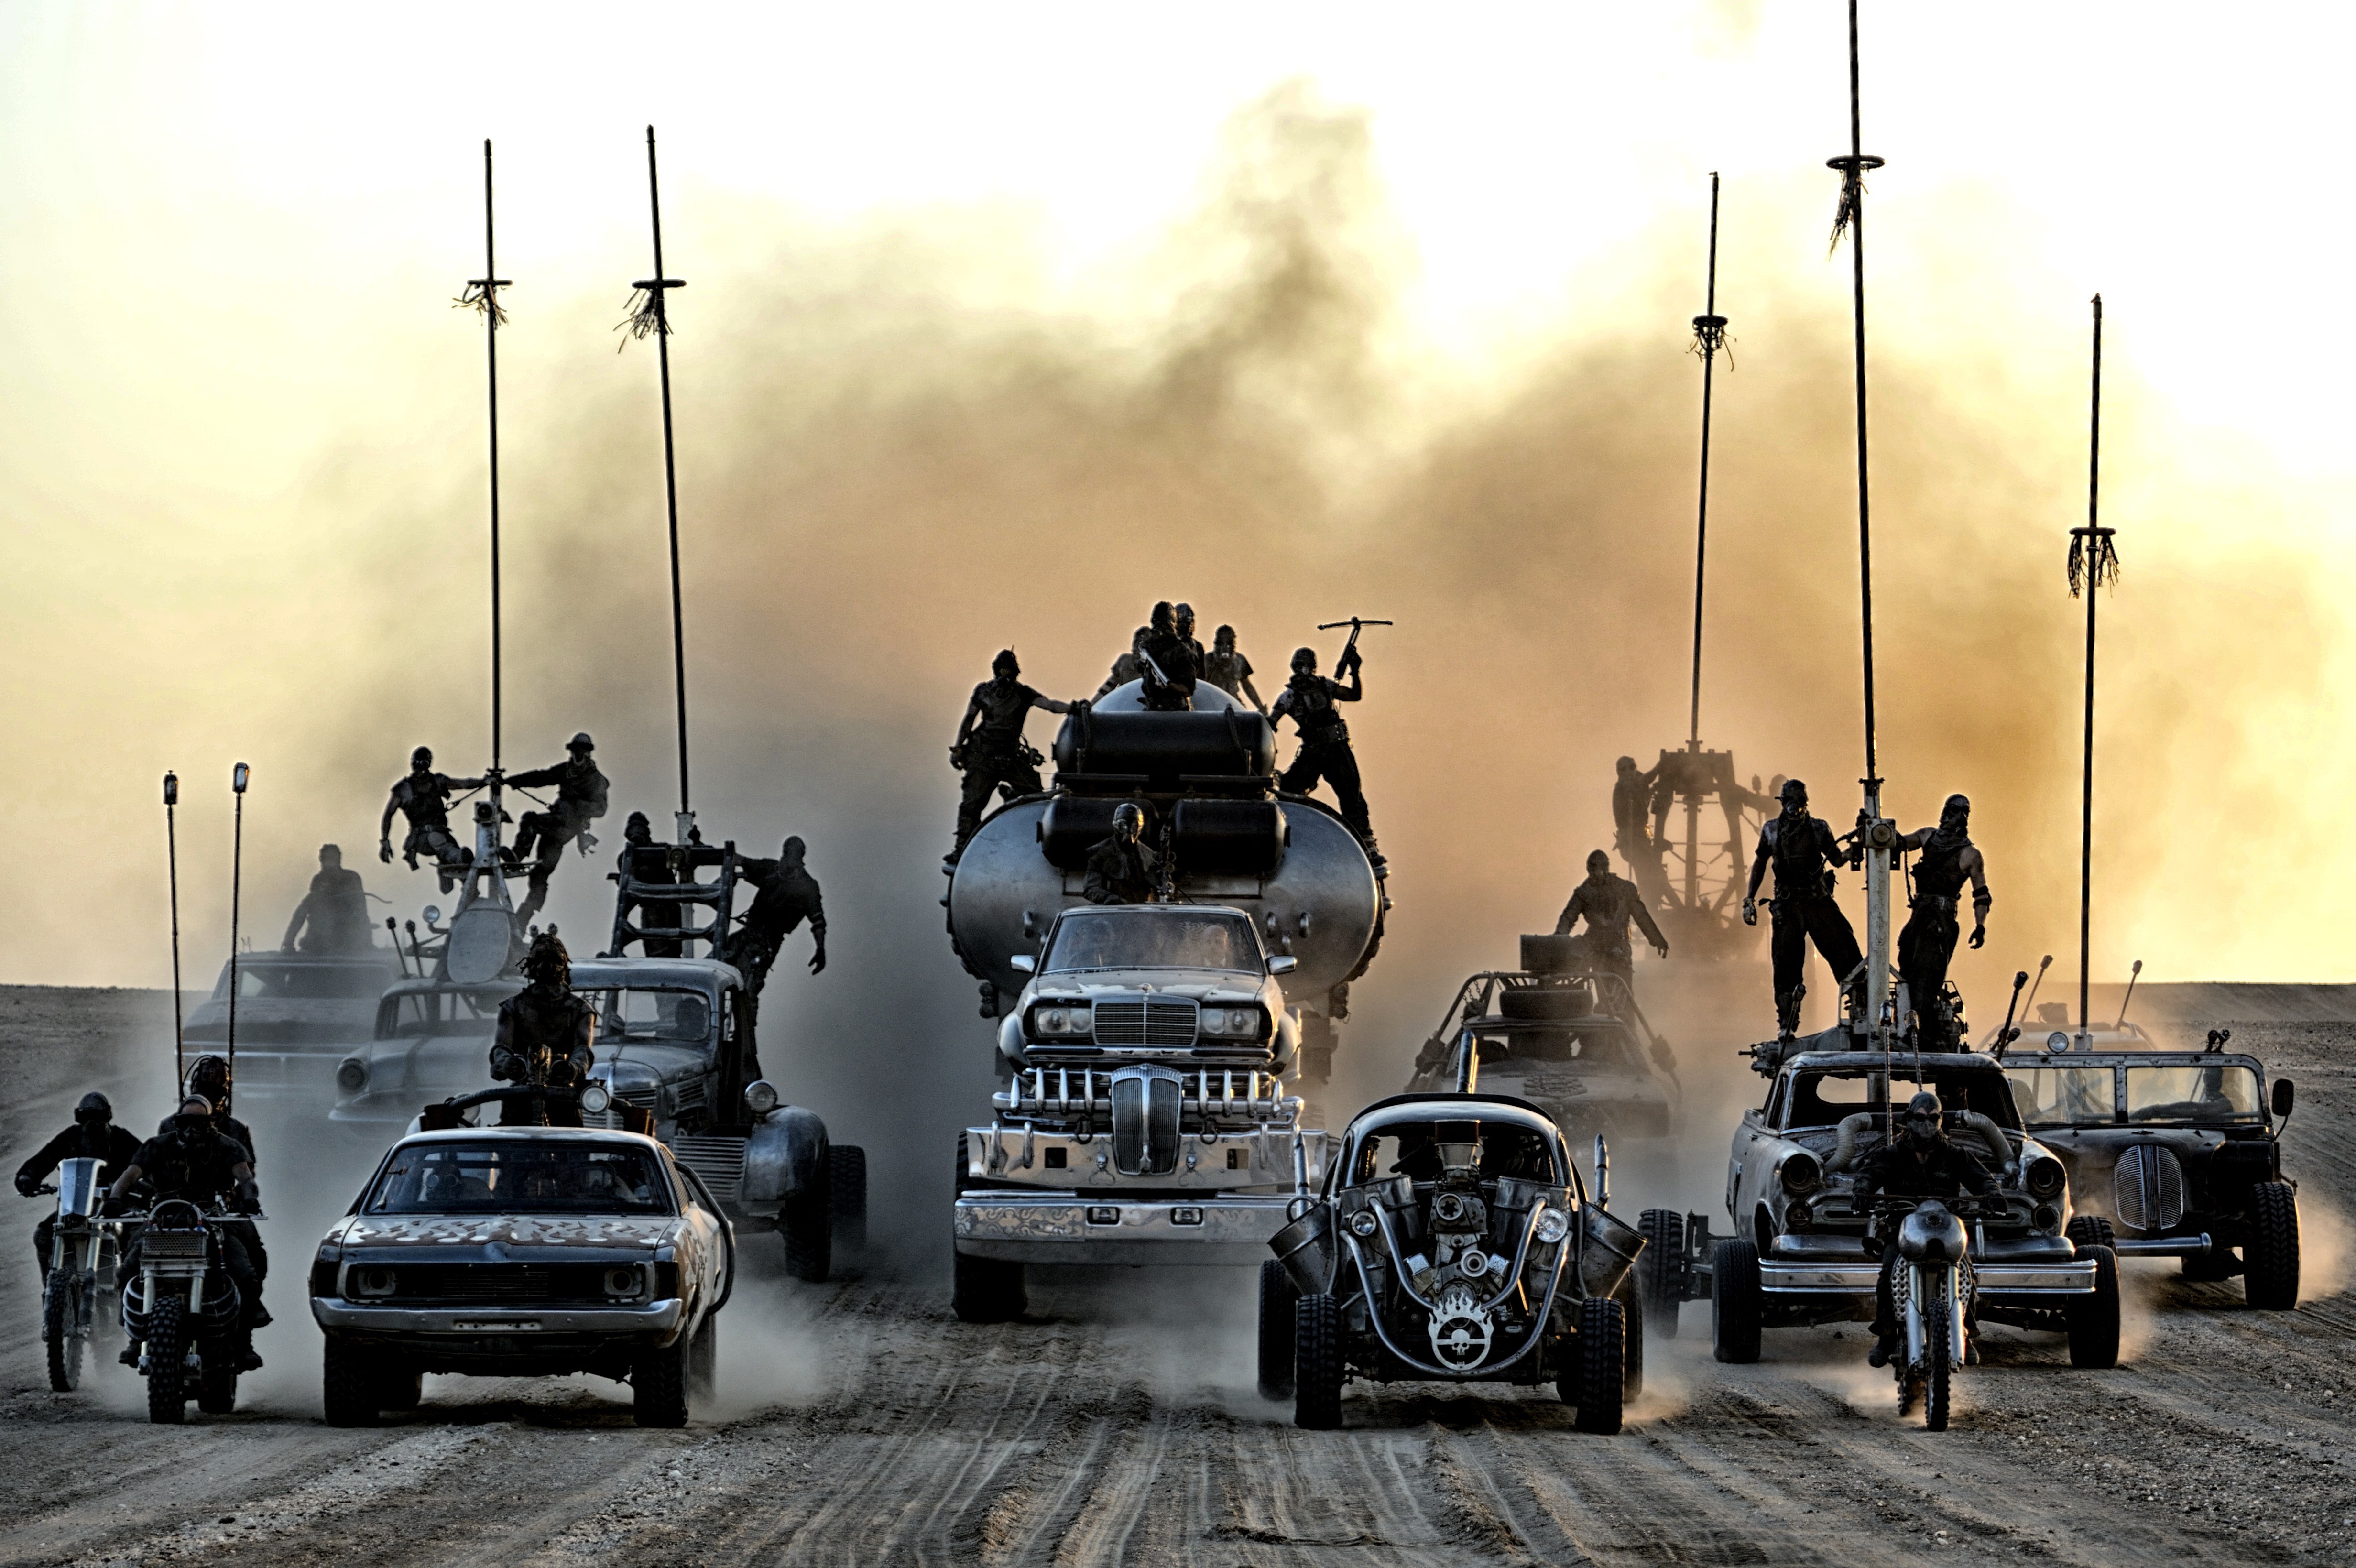 Mad Max: Fury Road, Movies Wallpaper